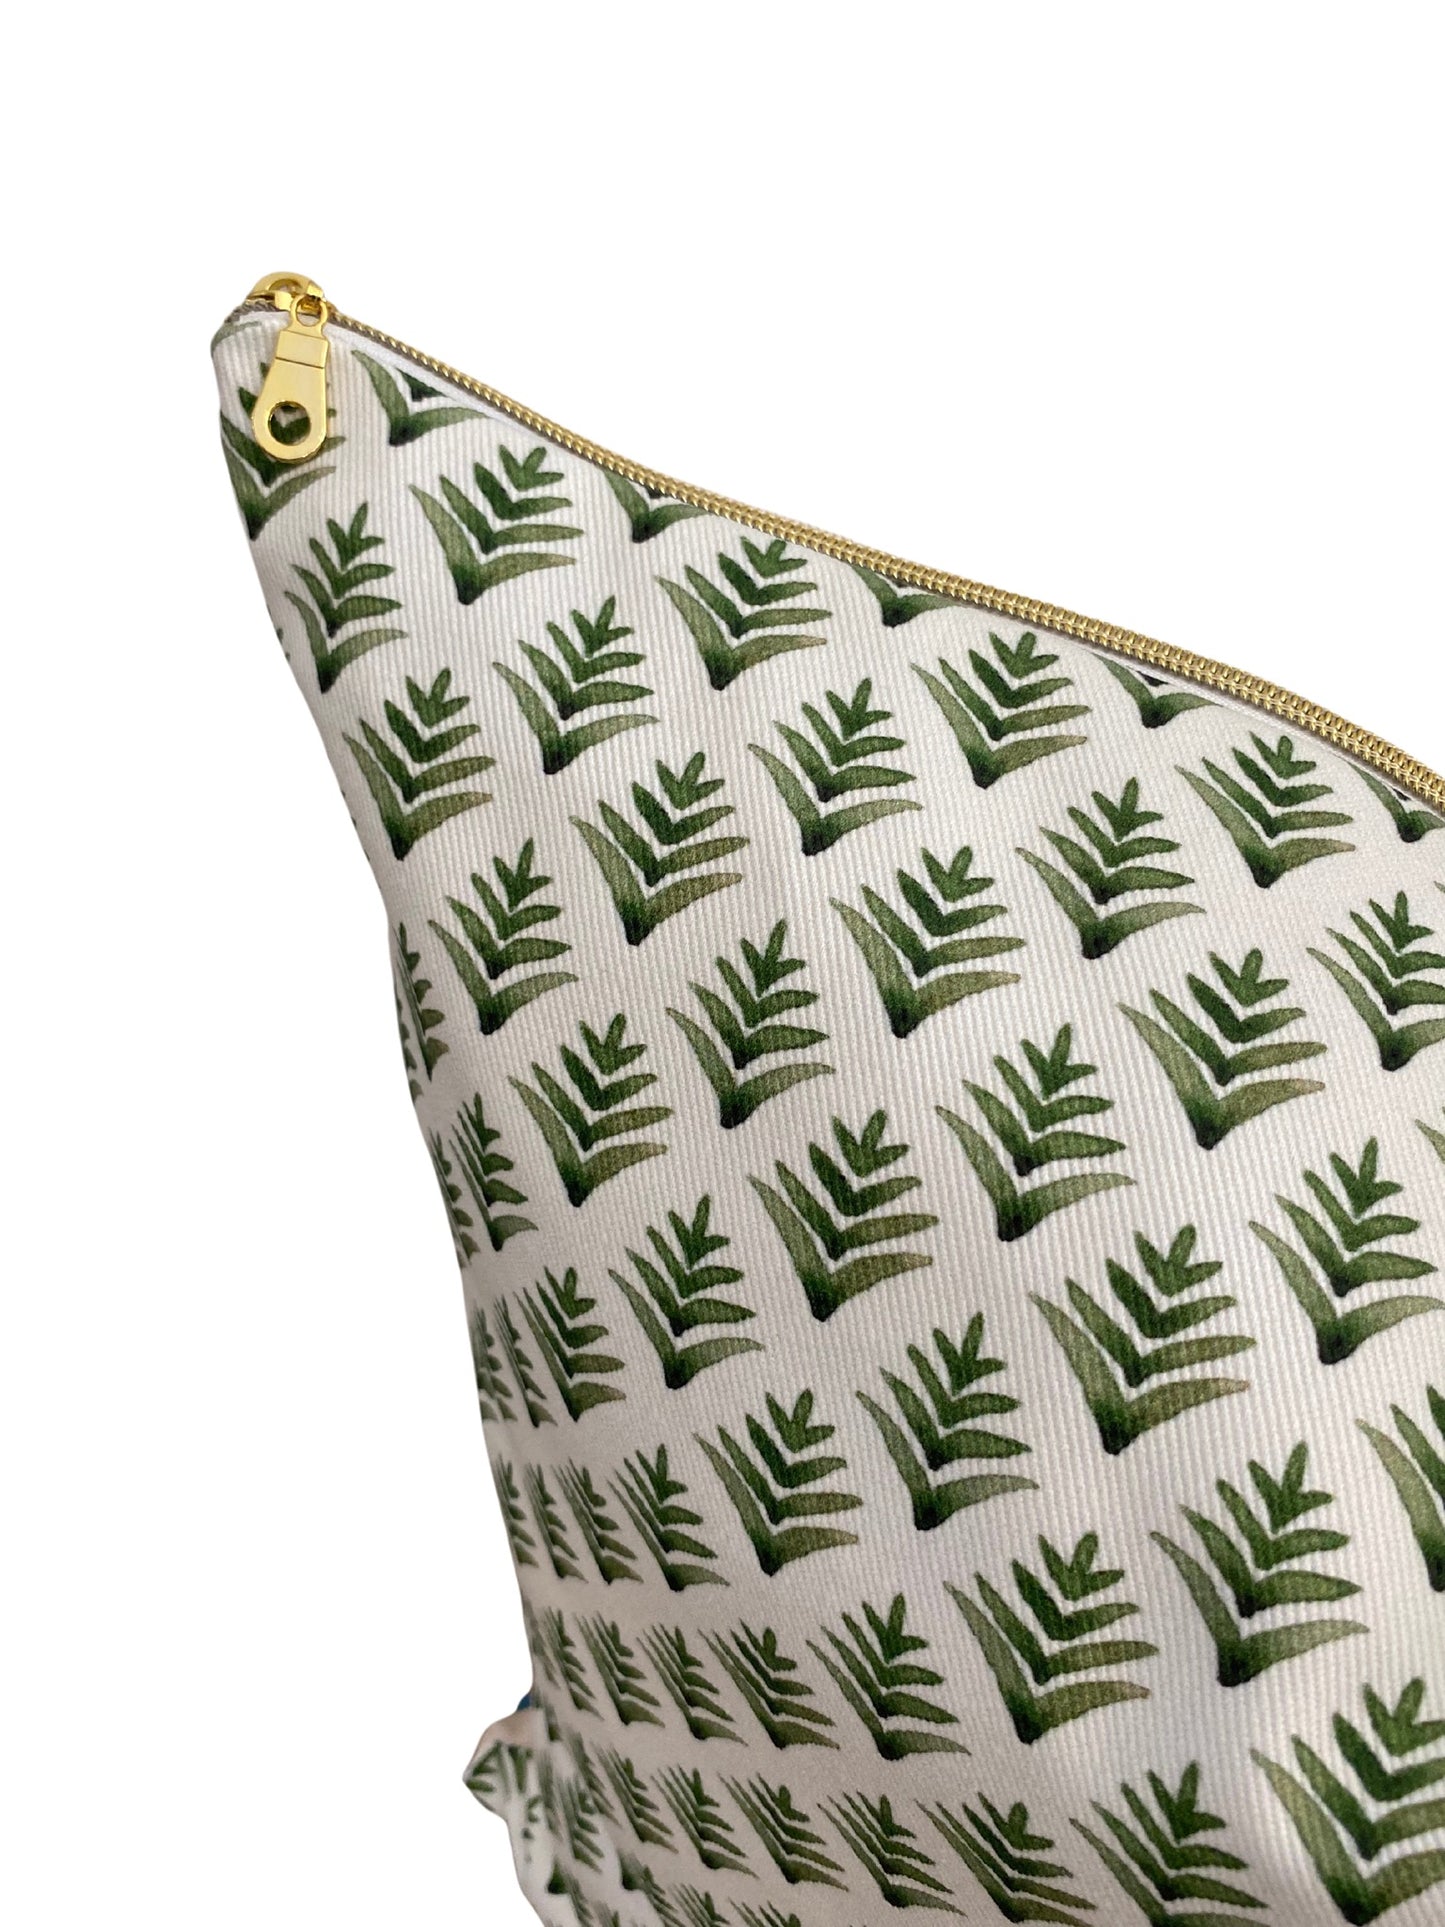 Pinecone Pillow Cover - Designed by Danika Herrick